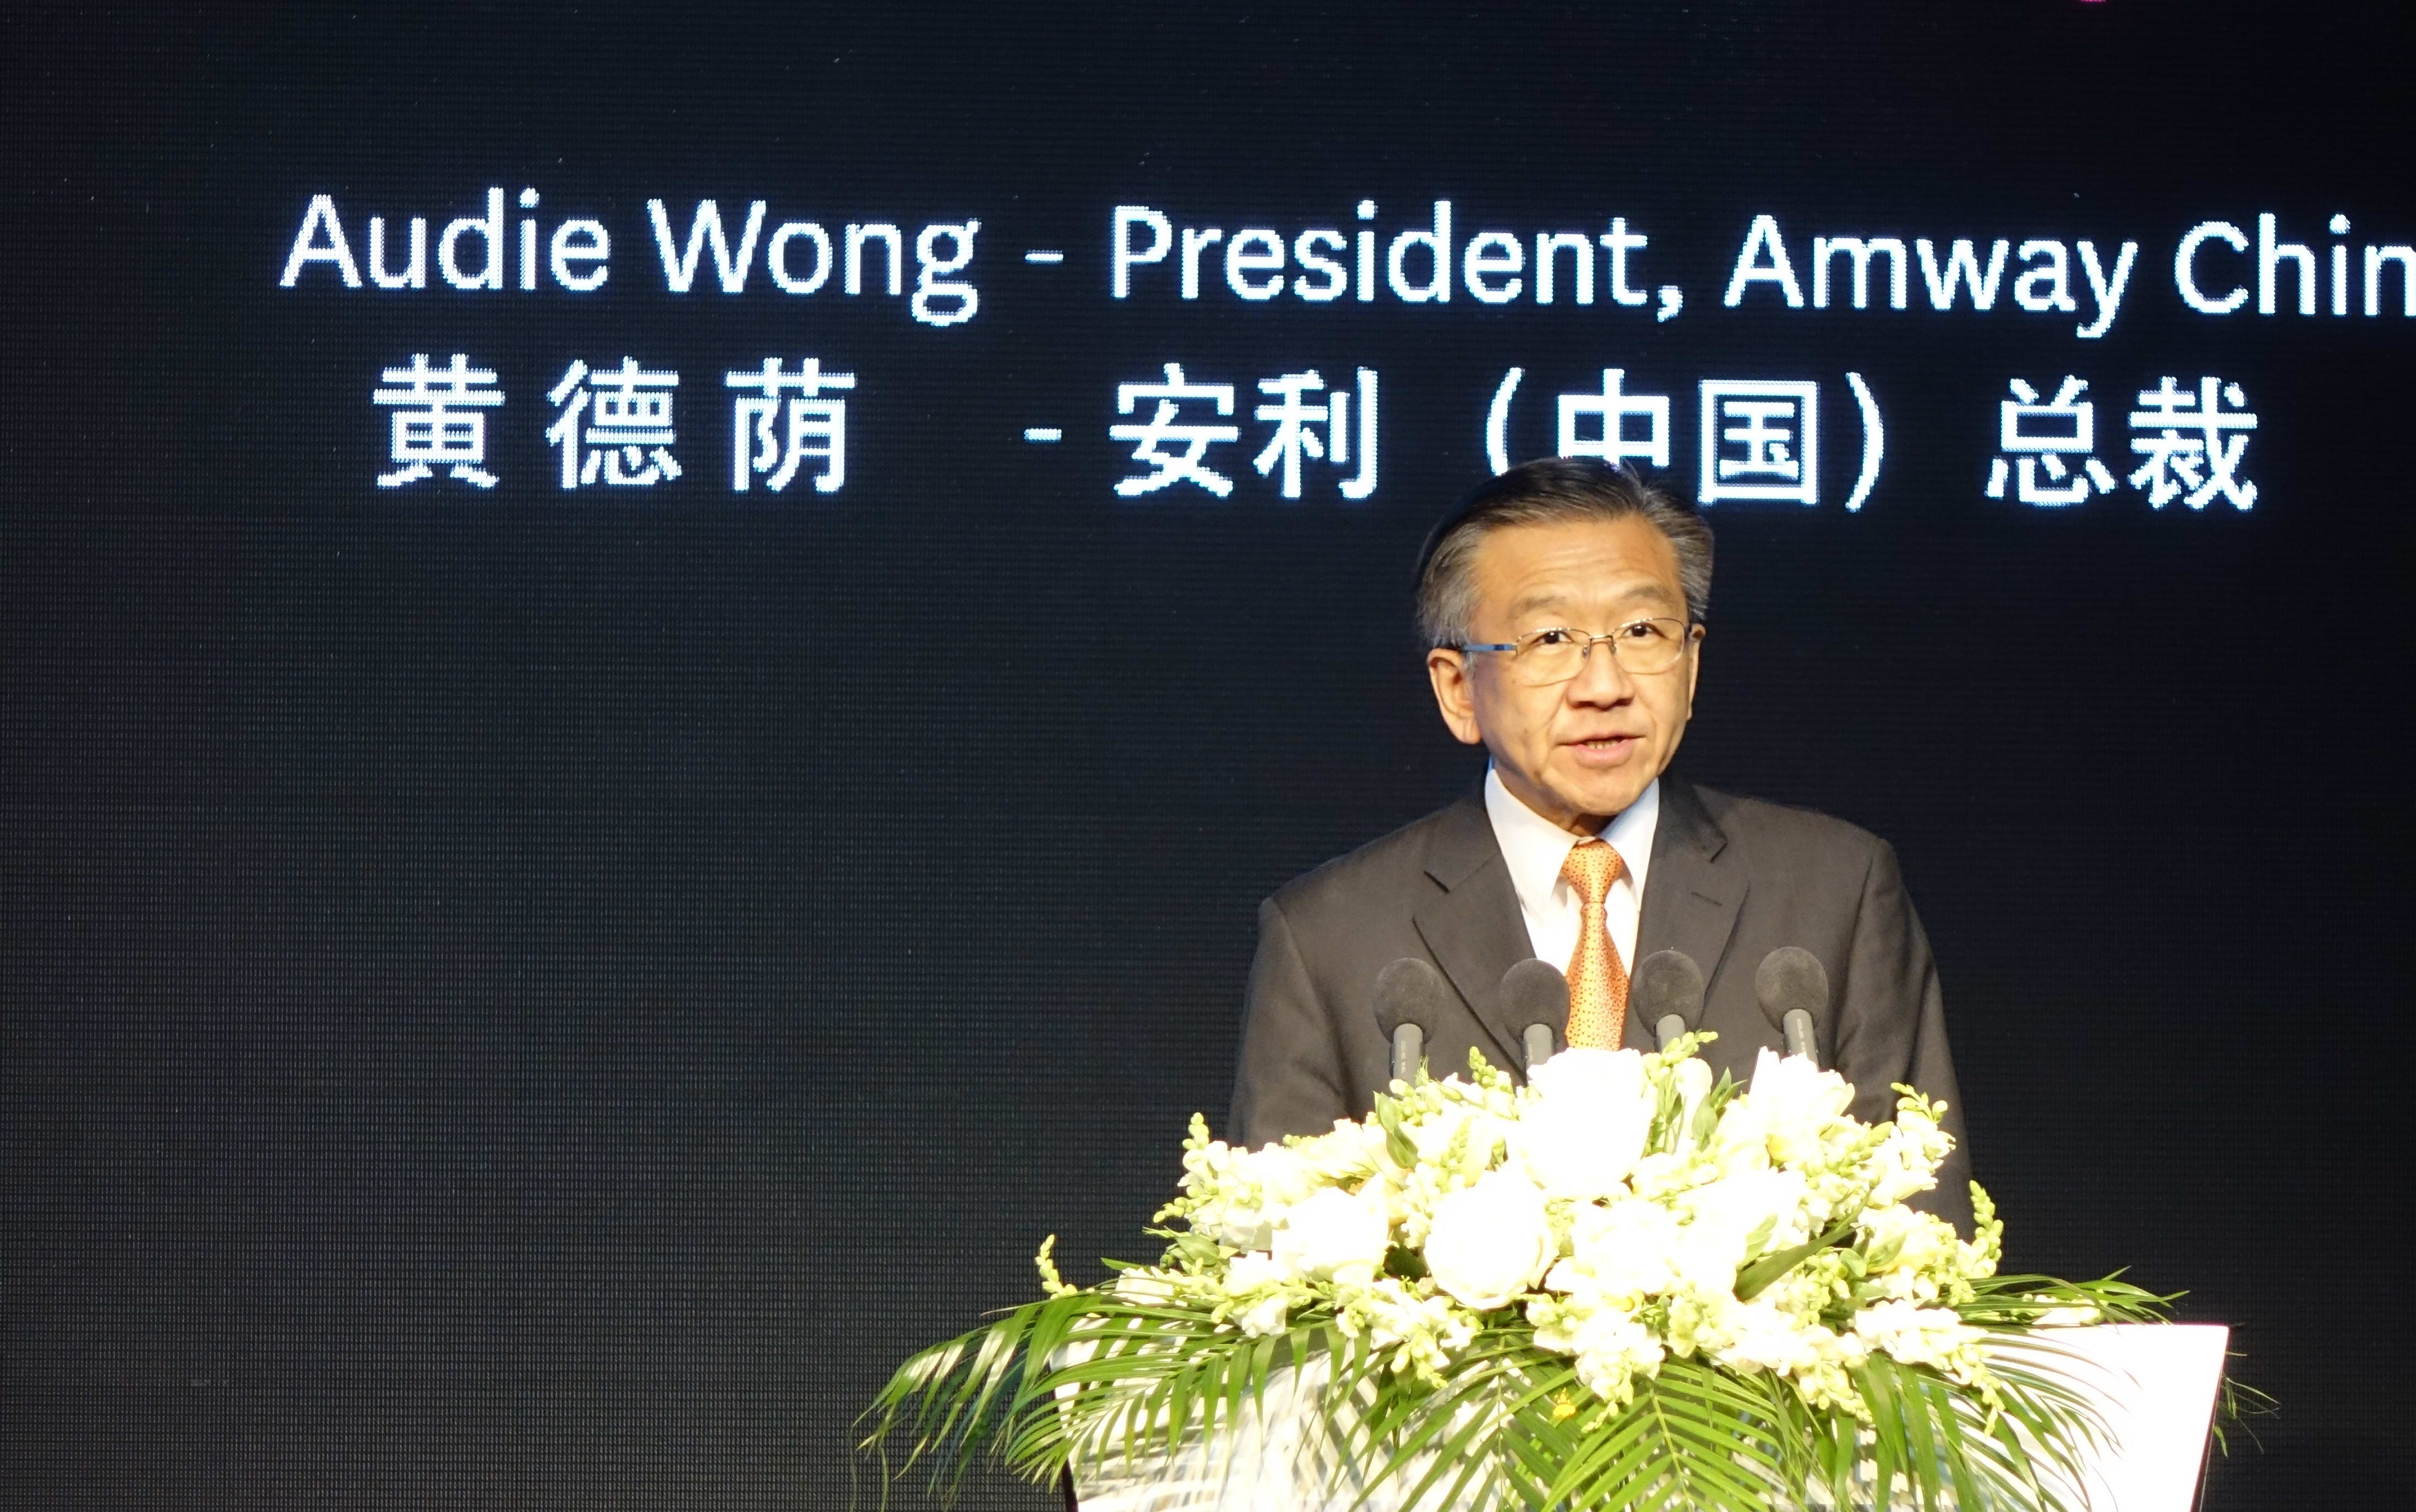 Amway China president Audie Wong.